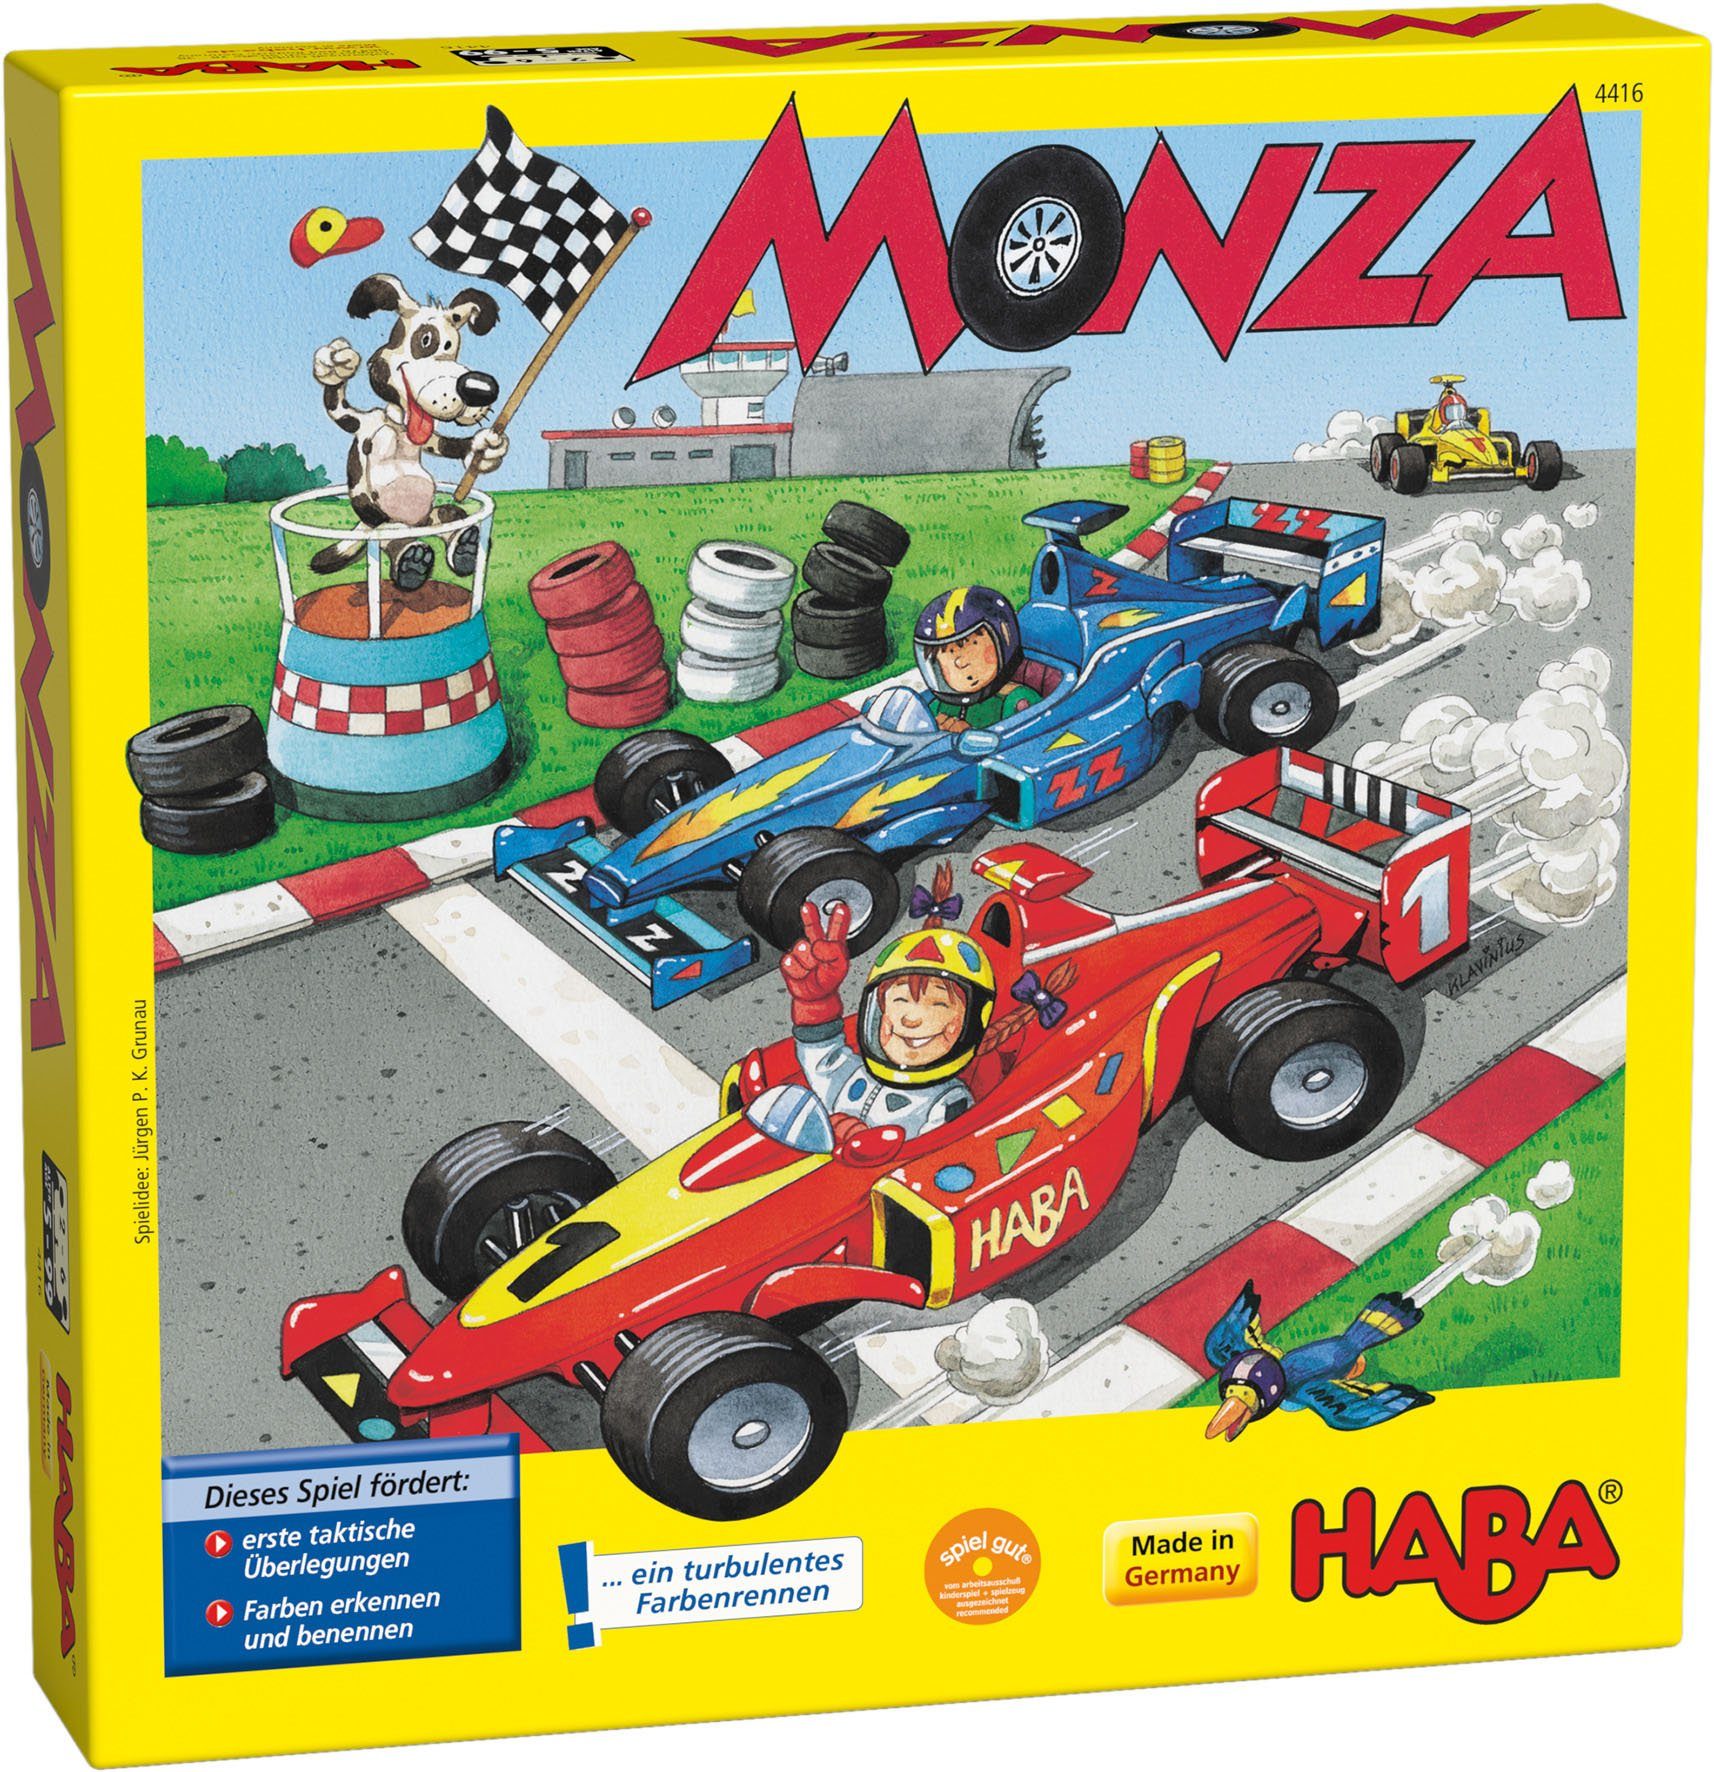 Haba Spiel, Würfelspiel Holzspielzeug, Monza, Made in Germany